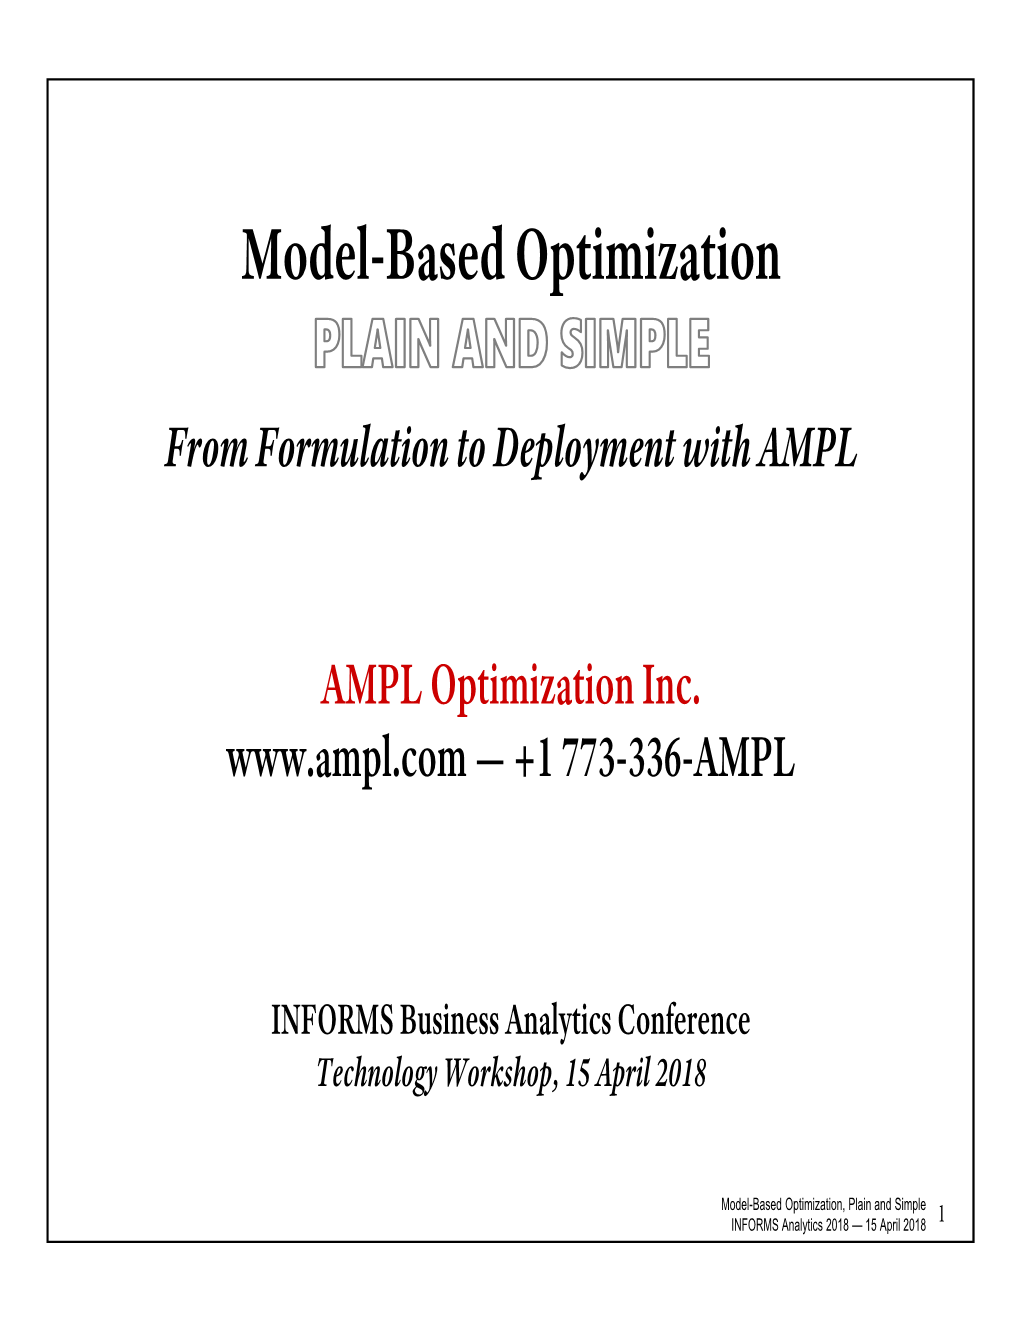 Model-Based Optimization, Plain and Simple